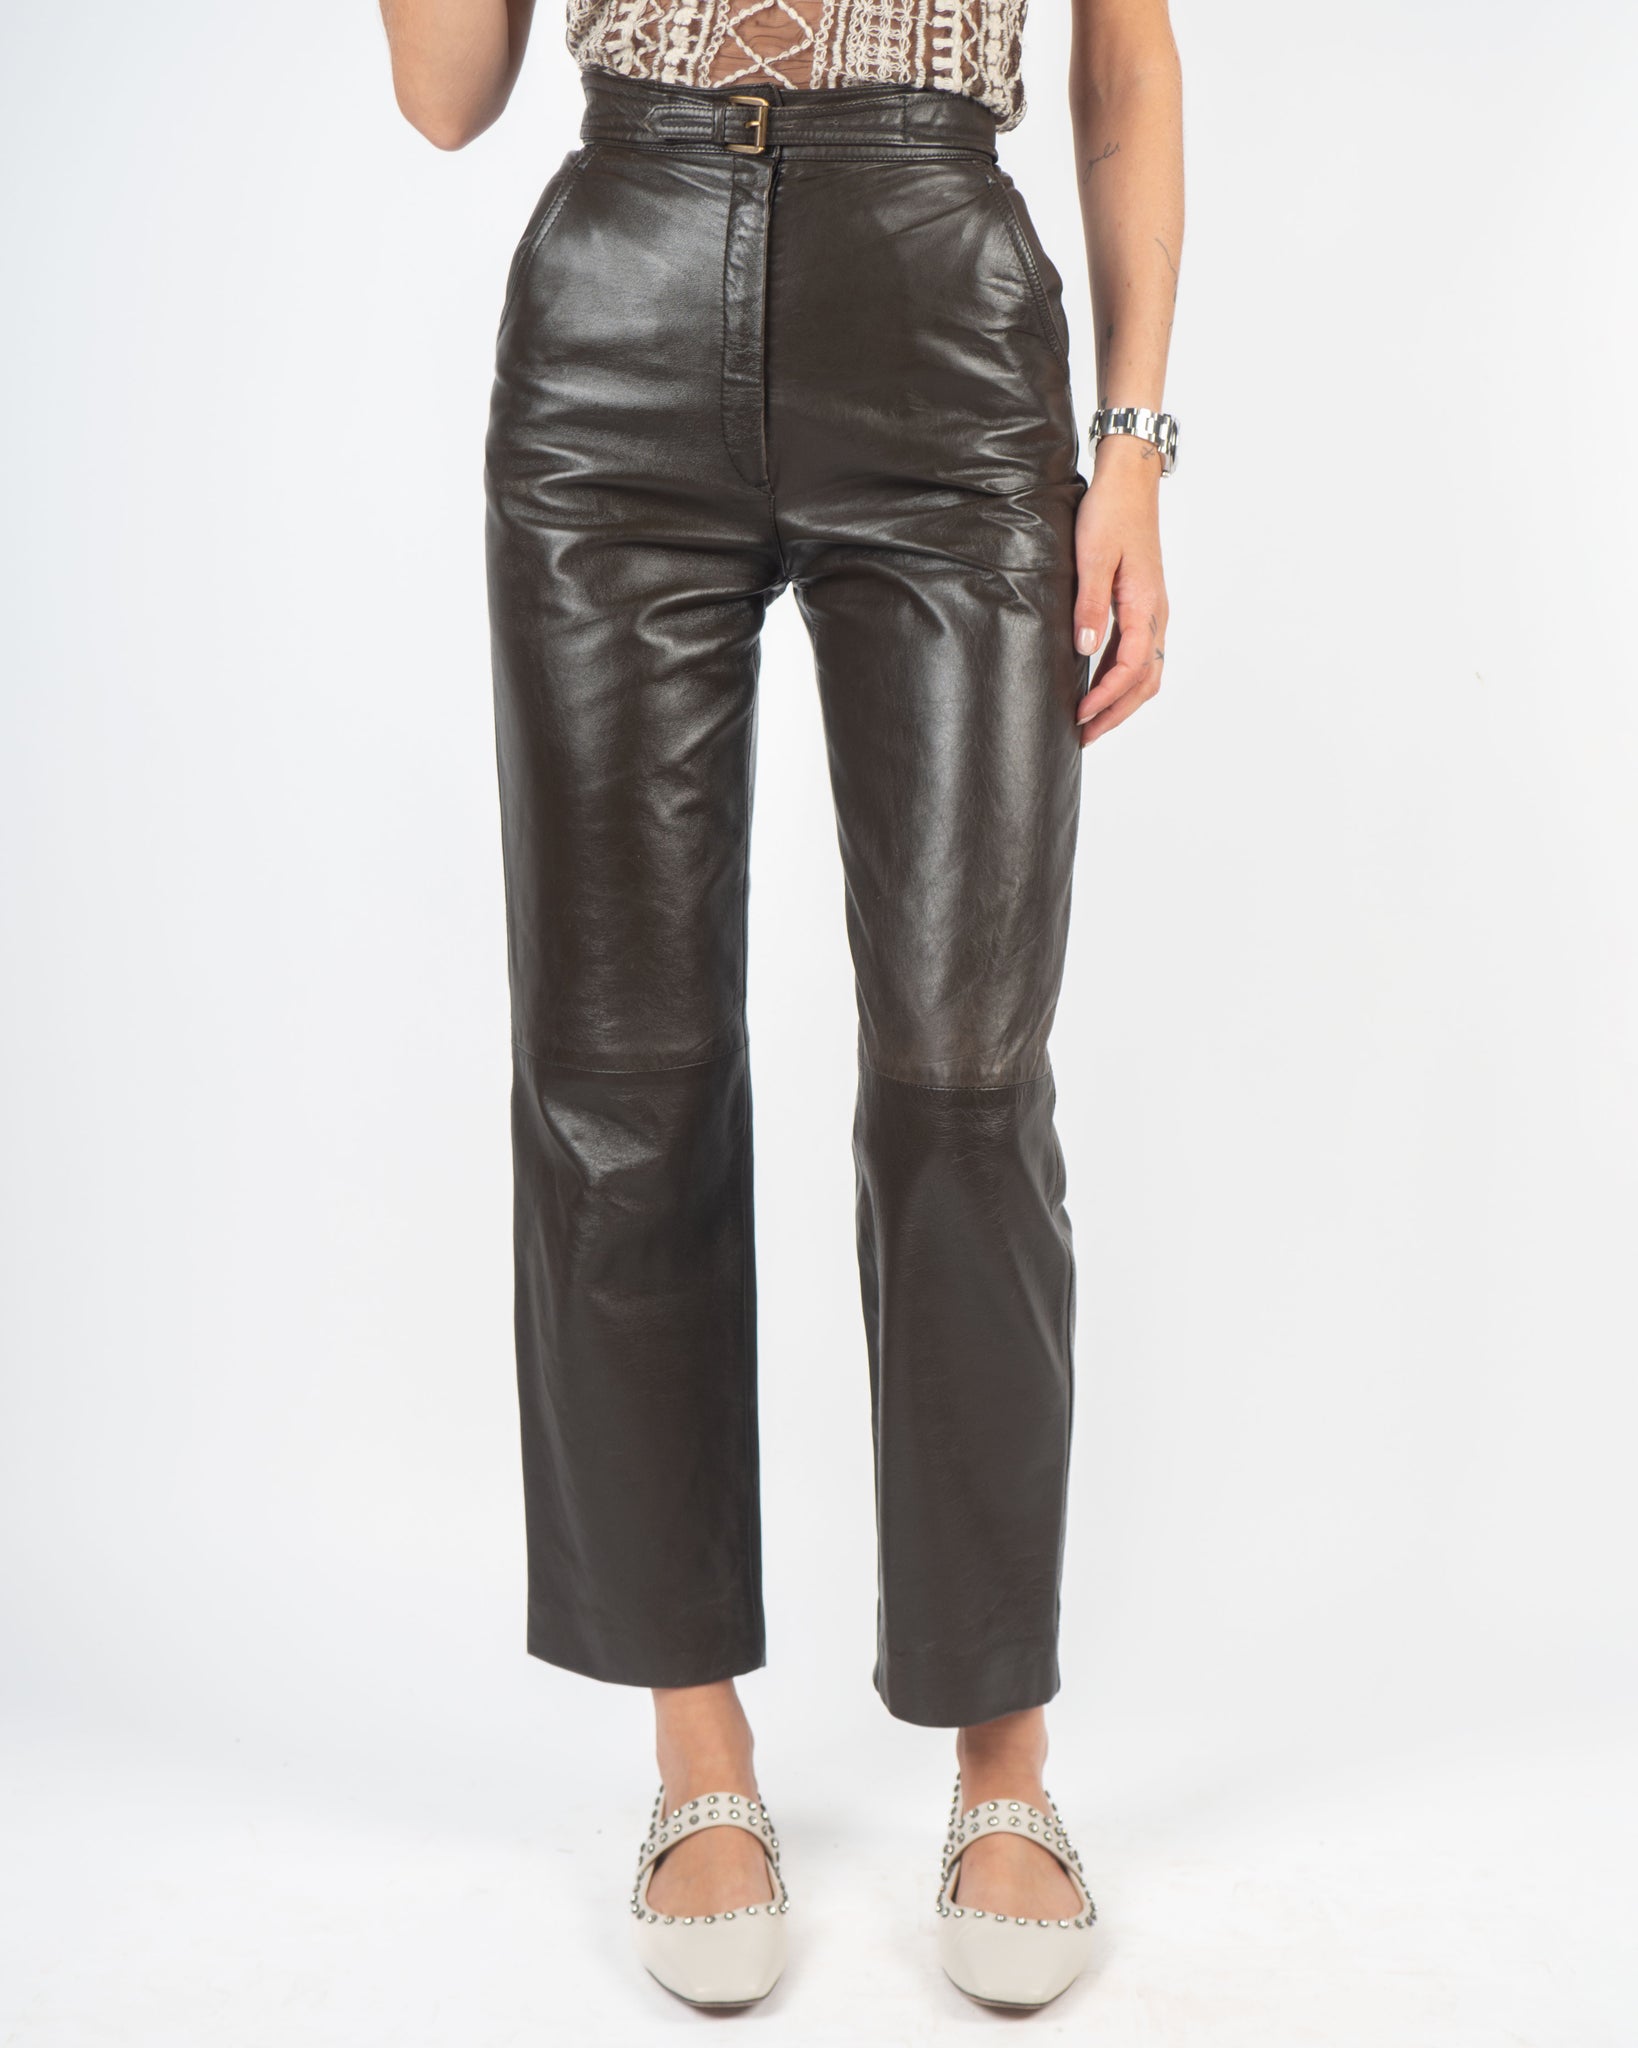 Khaki Leather Pants